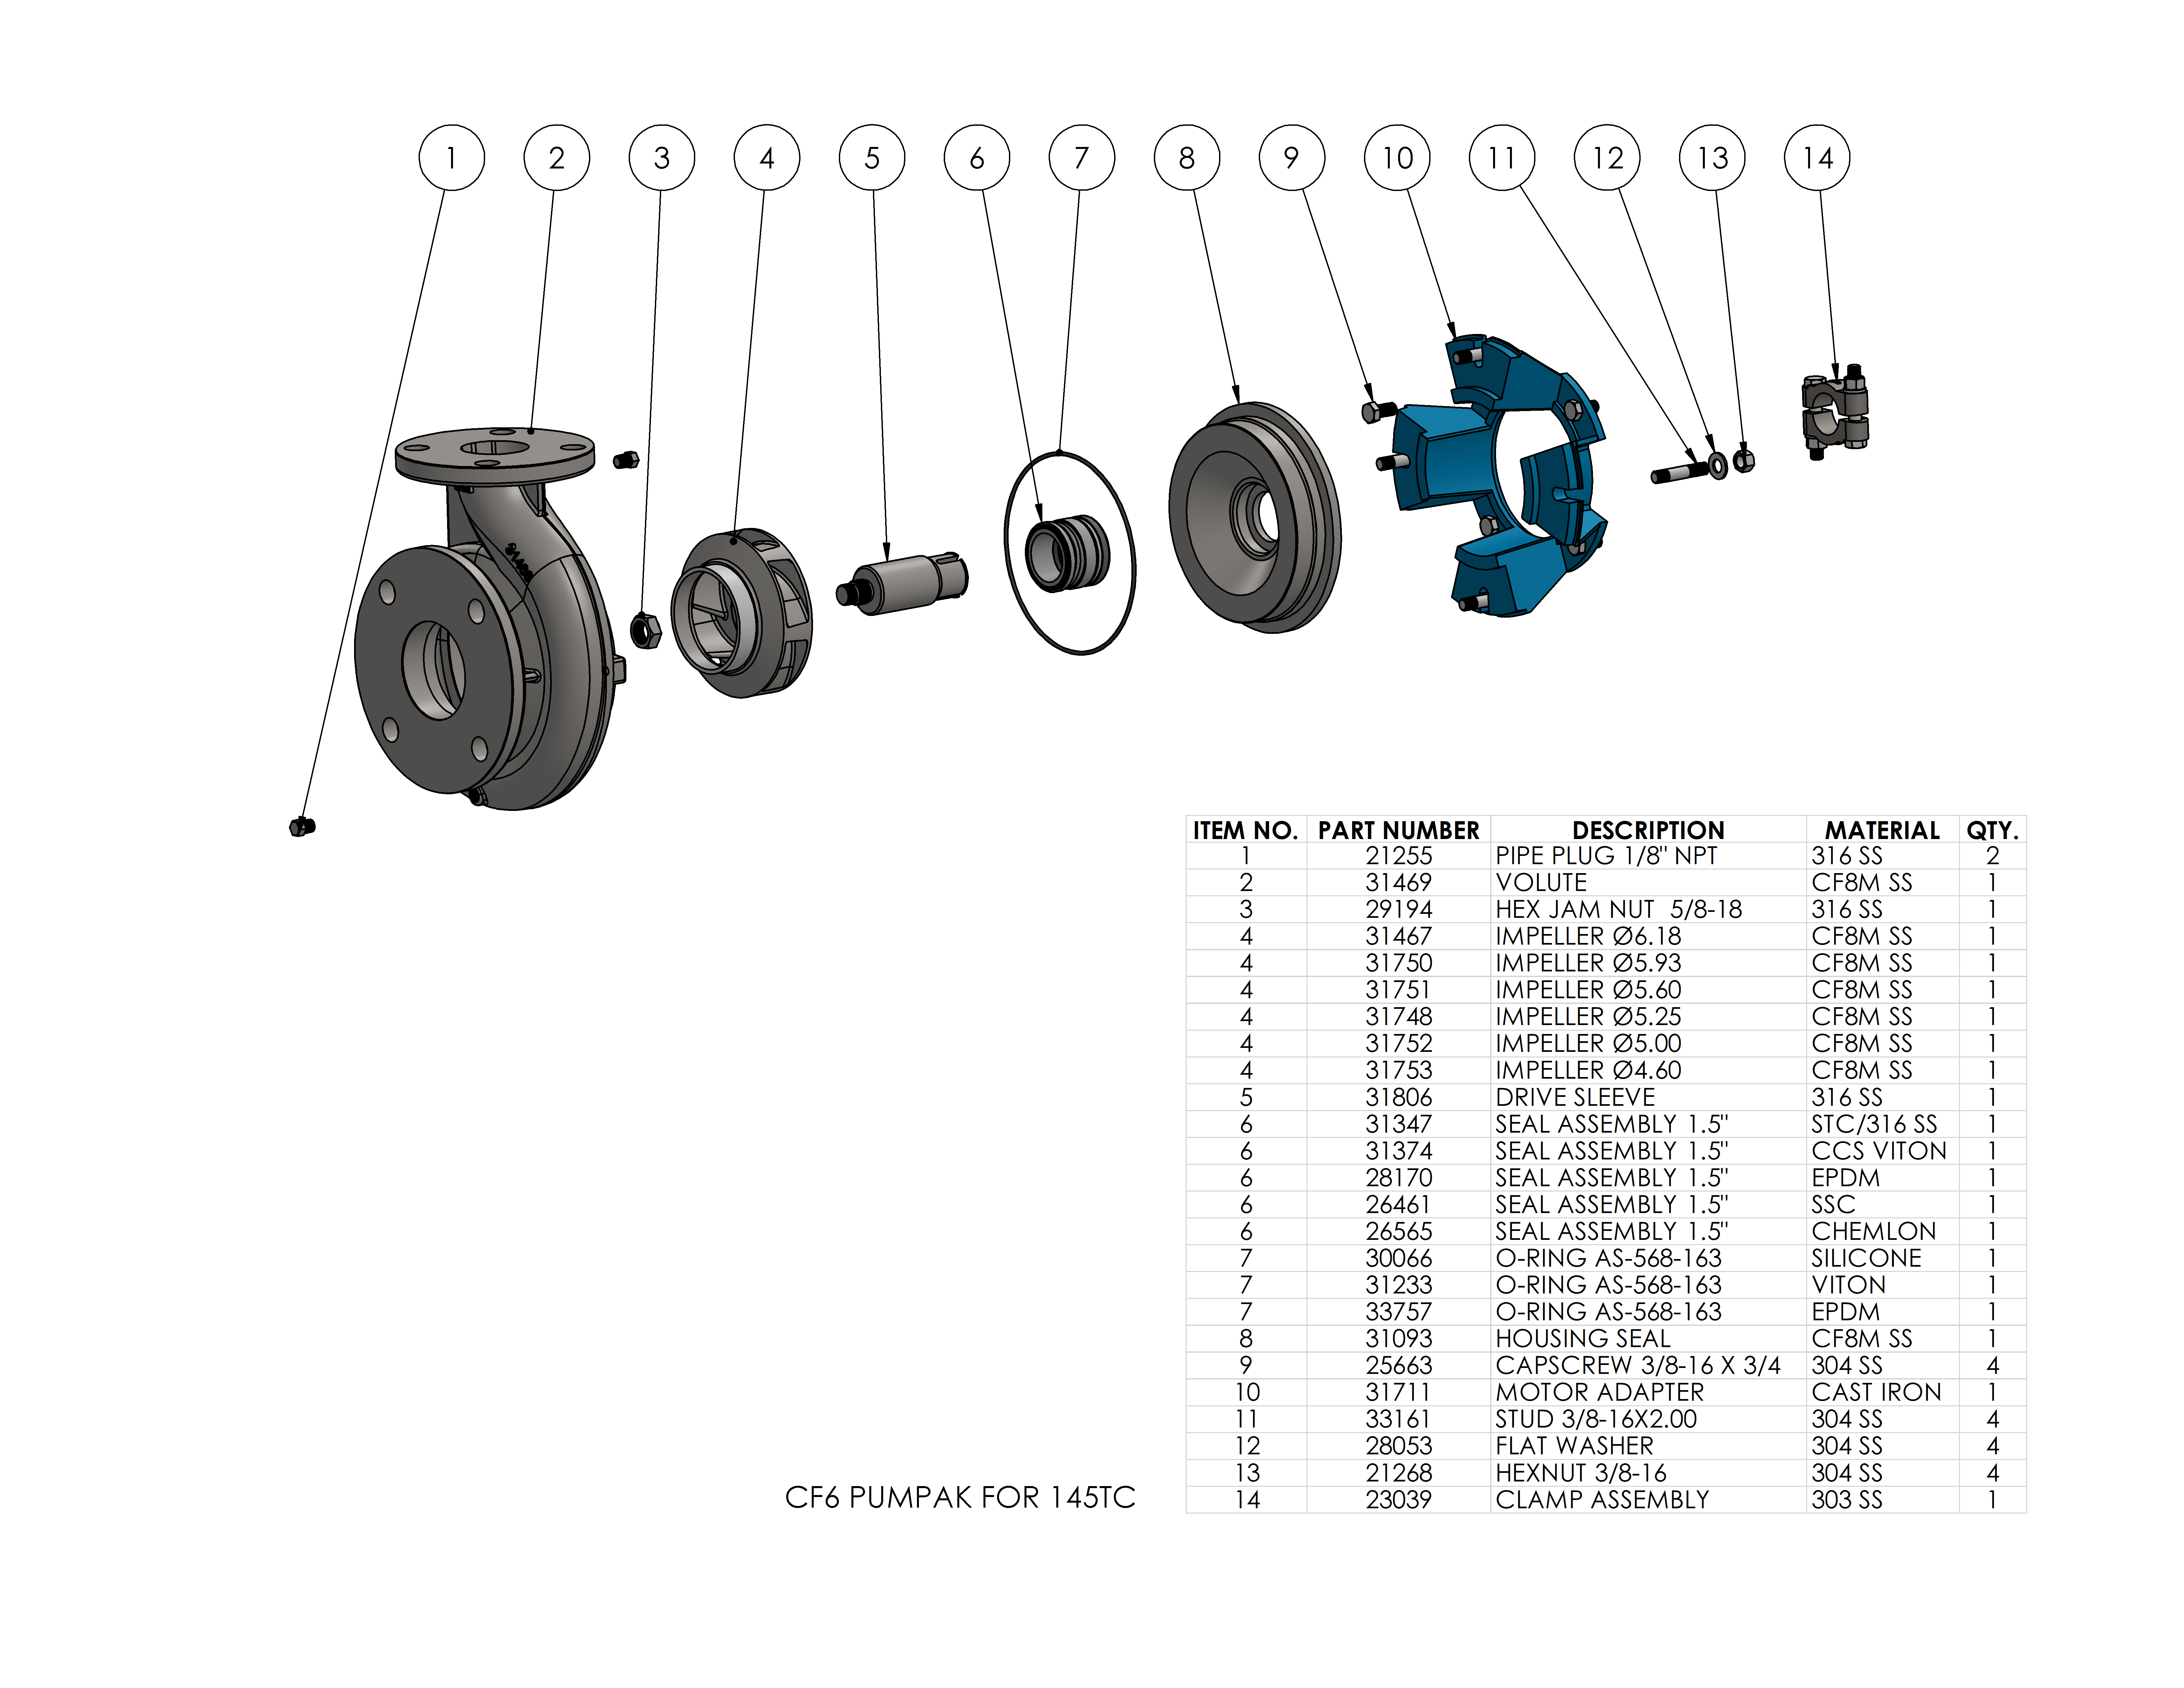 chemflo-6_parts-list-cf6-pumpak-for-145tc